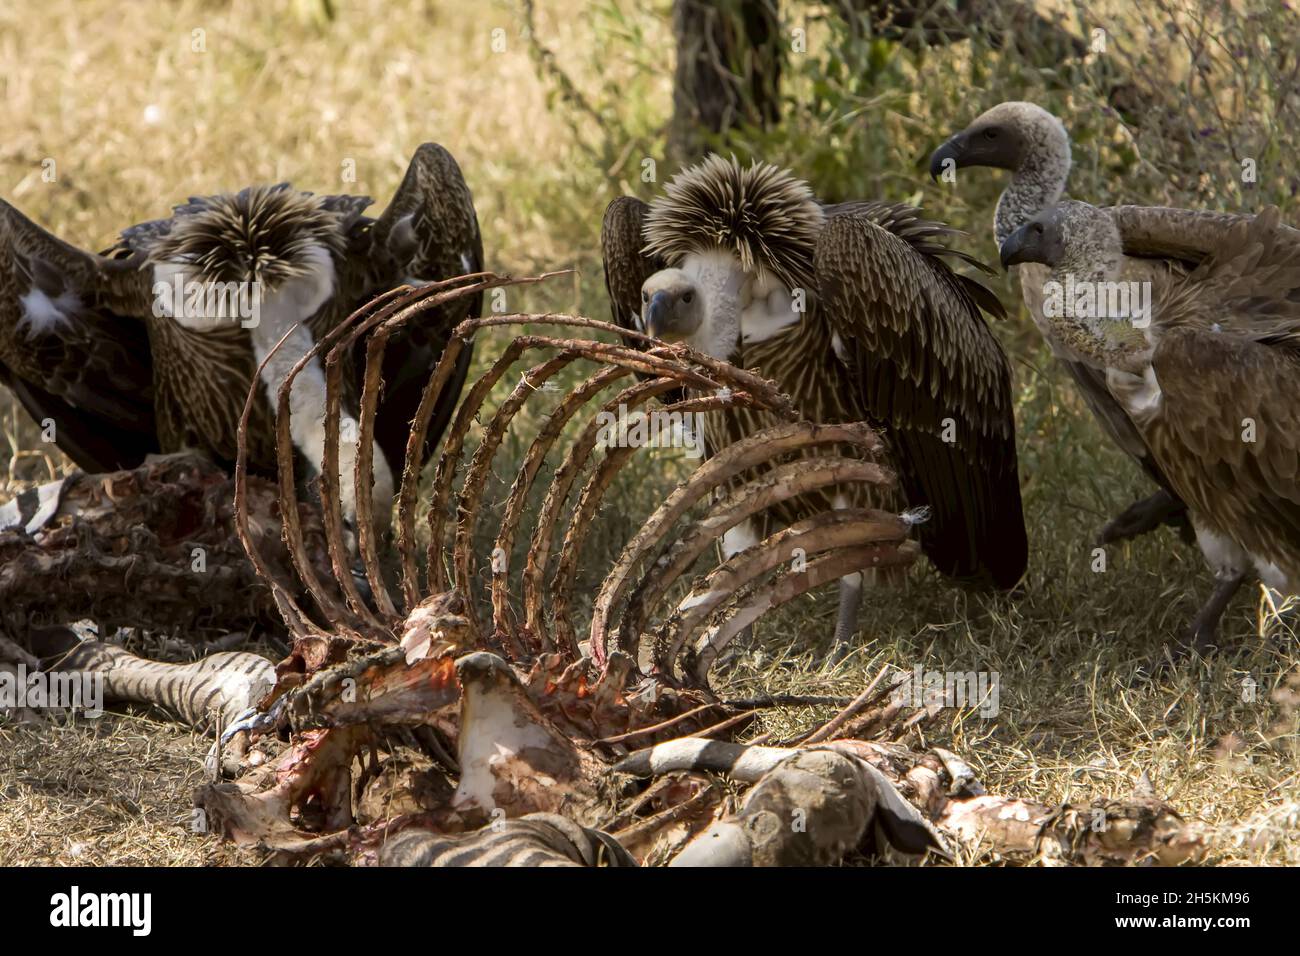 Hooded vultures, Necrosyrtes monachus pileatus, eating zebra carcass. Stock Photo